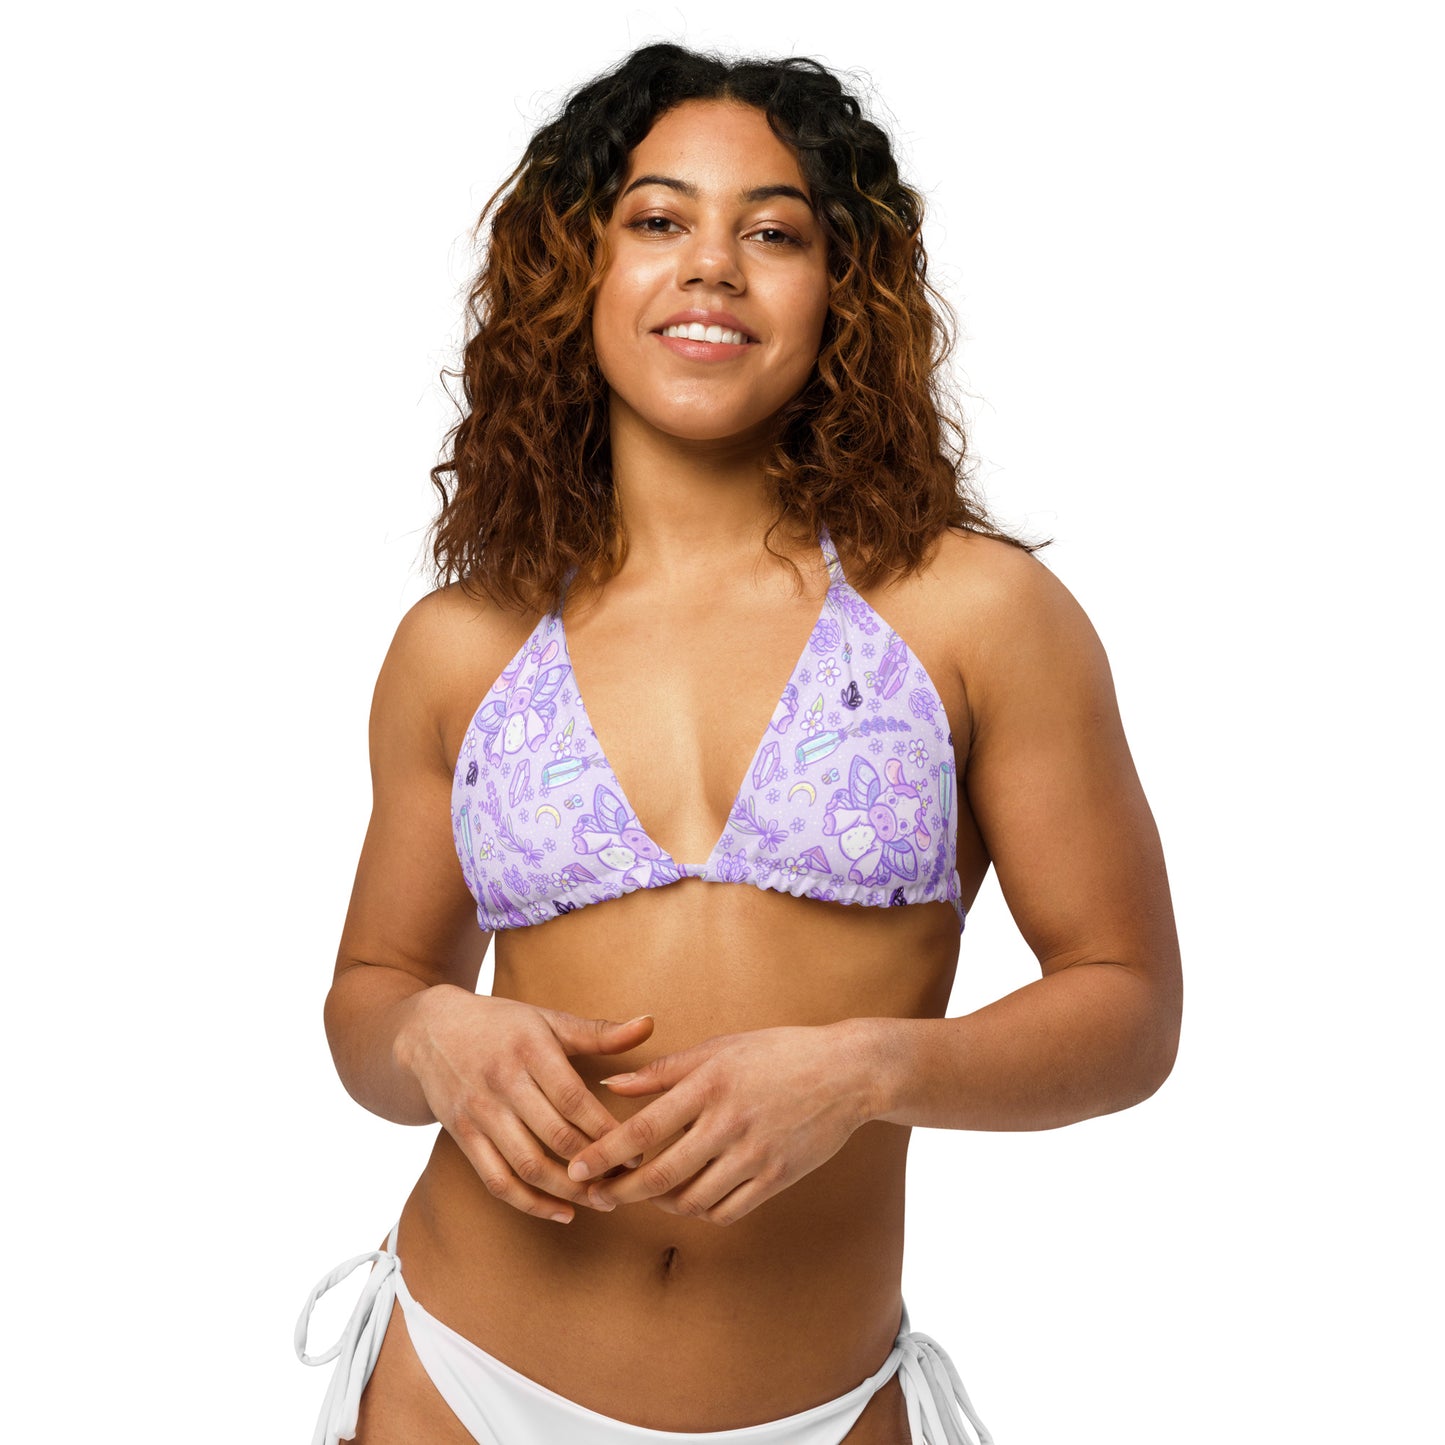 Lavender Cow string bikini top, plus size available